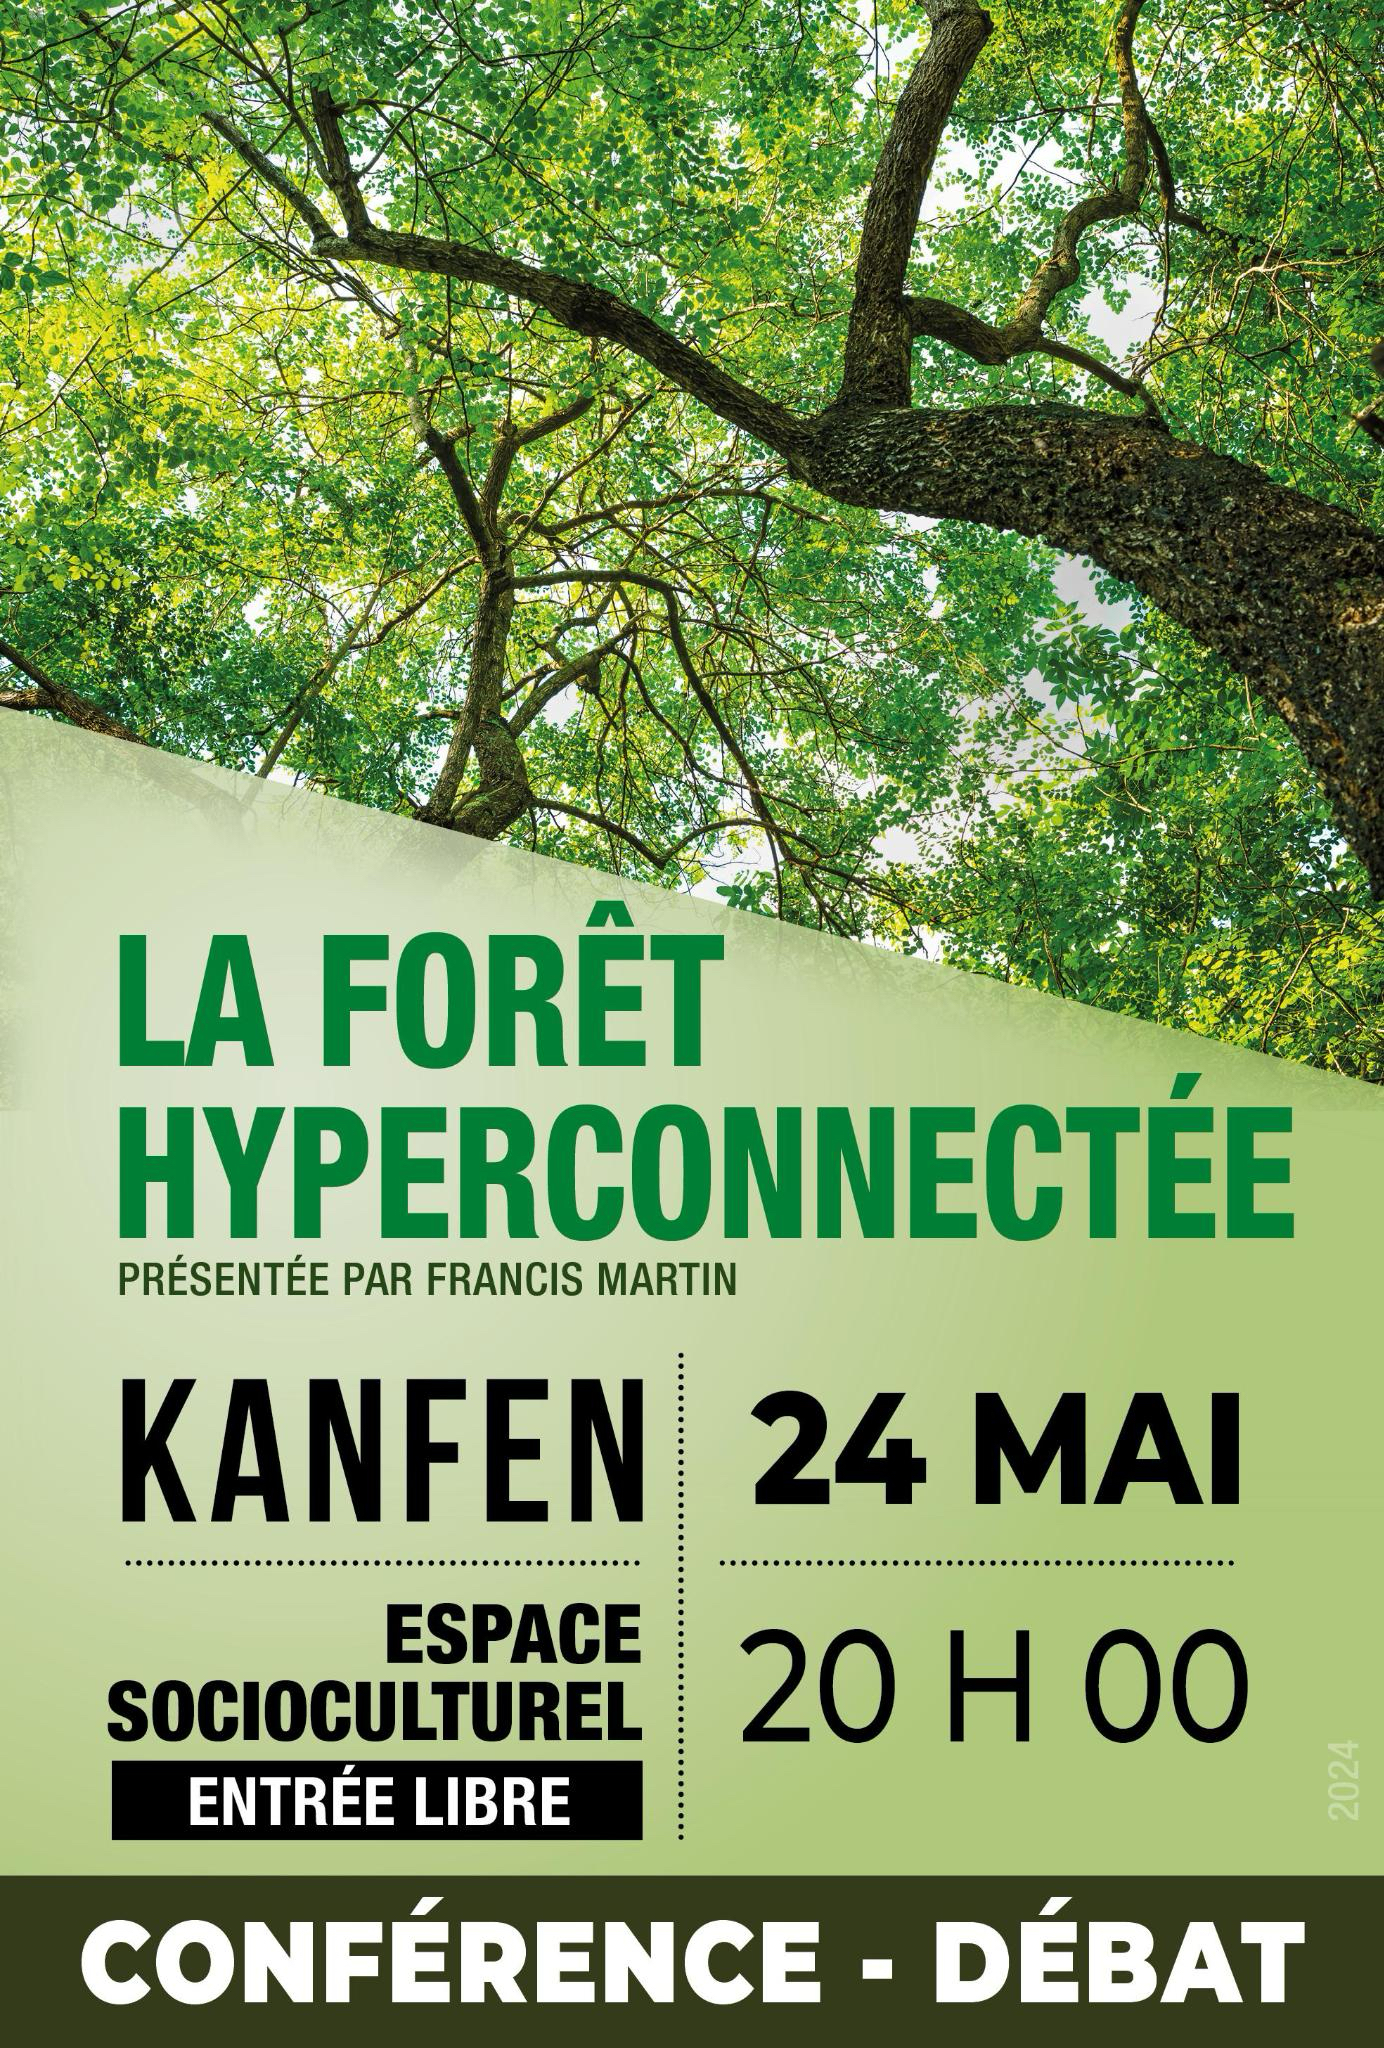 La forêt hyperconnectée - conférence